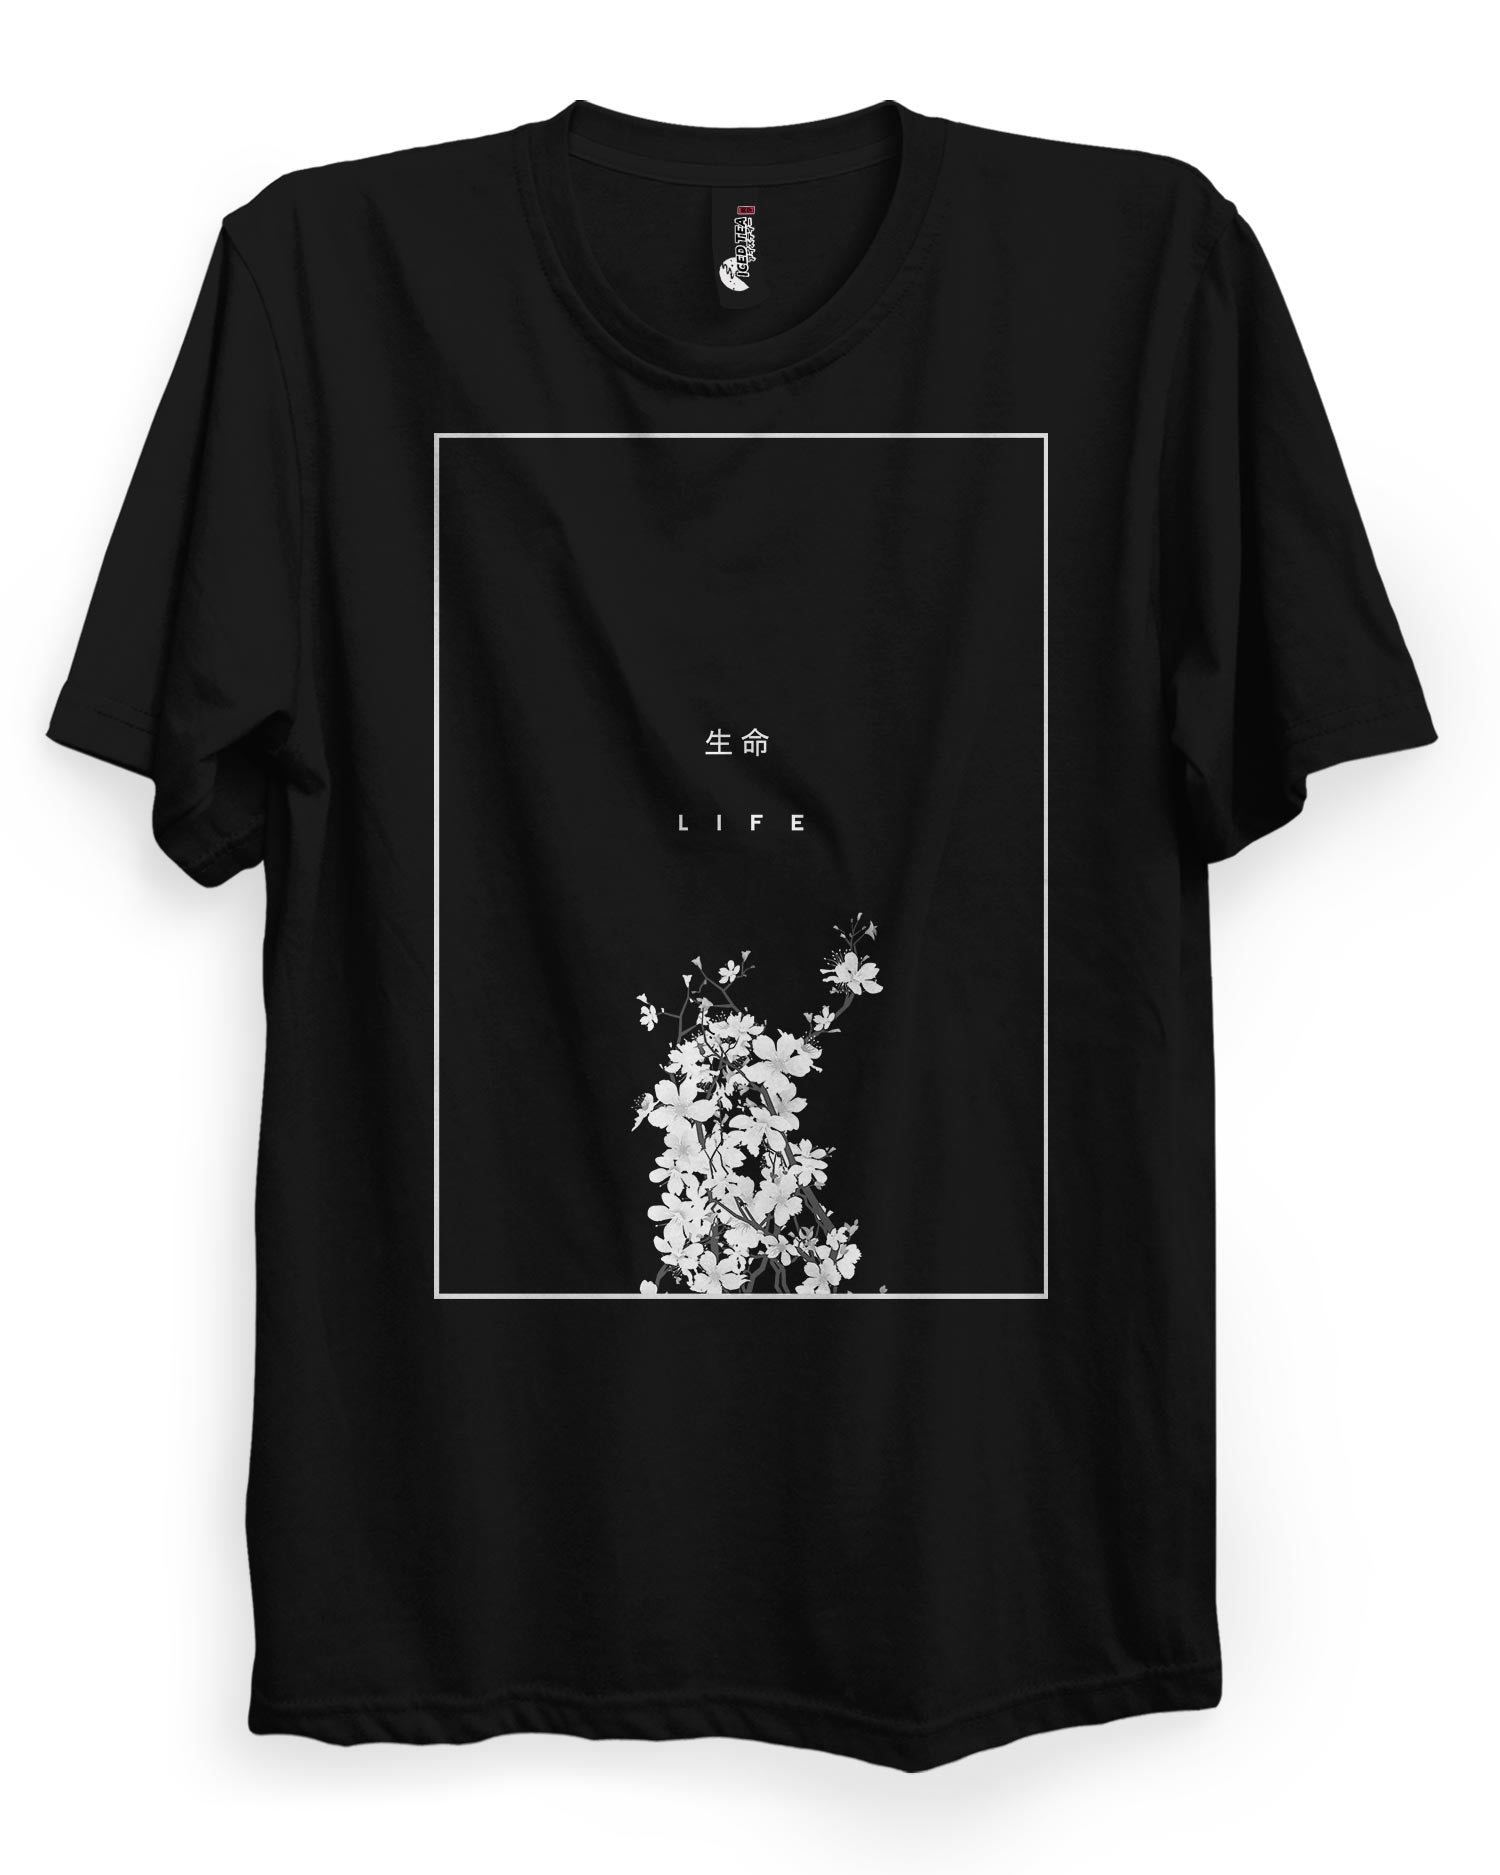 Life (Monochrome) - T-Shirt